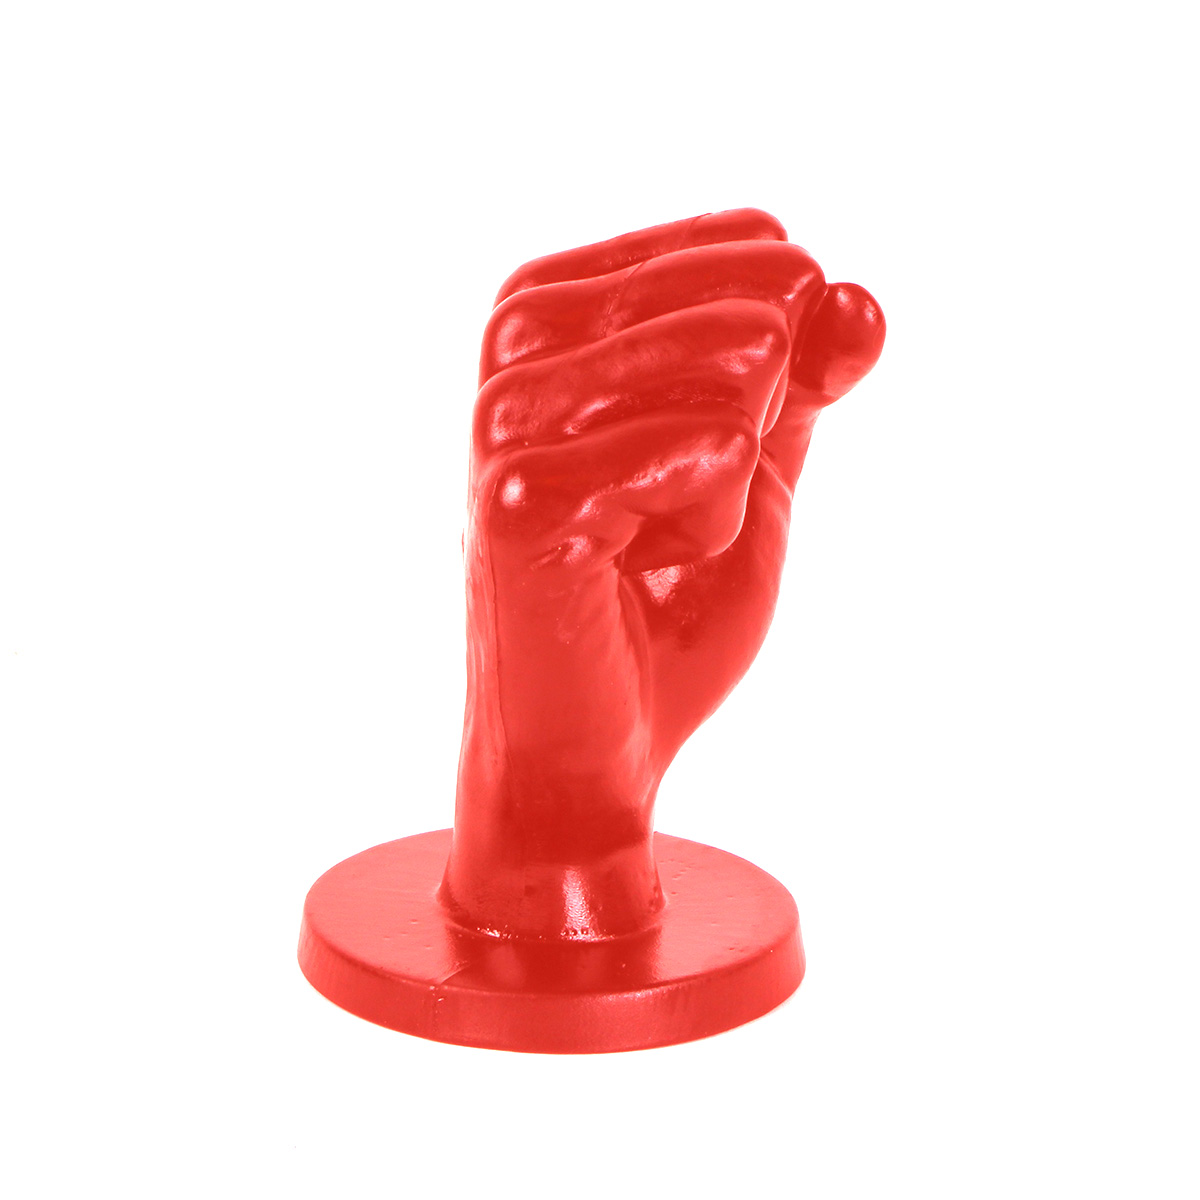 All-Red-Fist-Medium-ABR93-115-ABR93-3